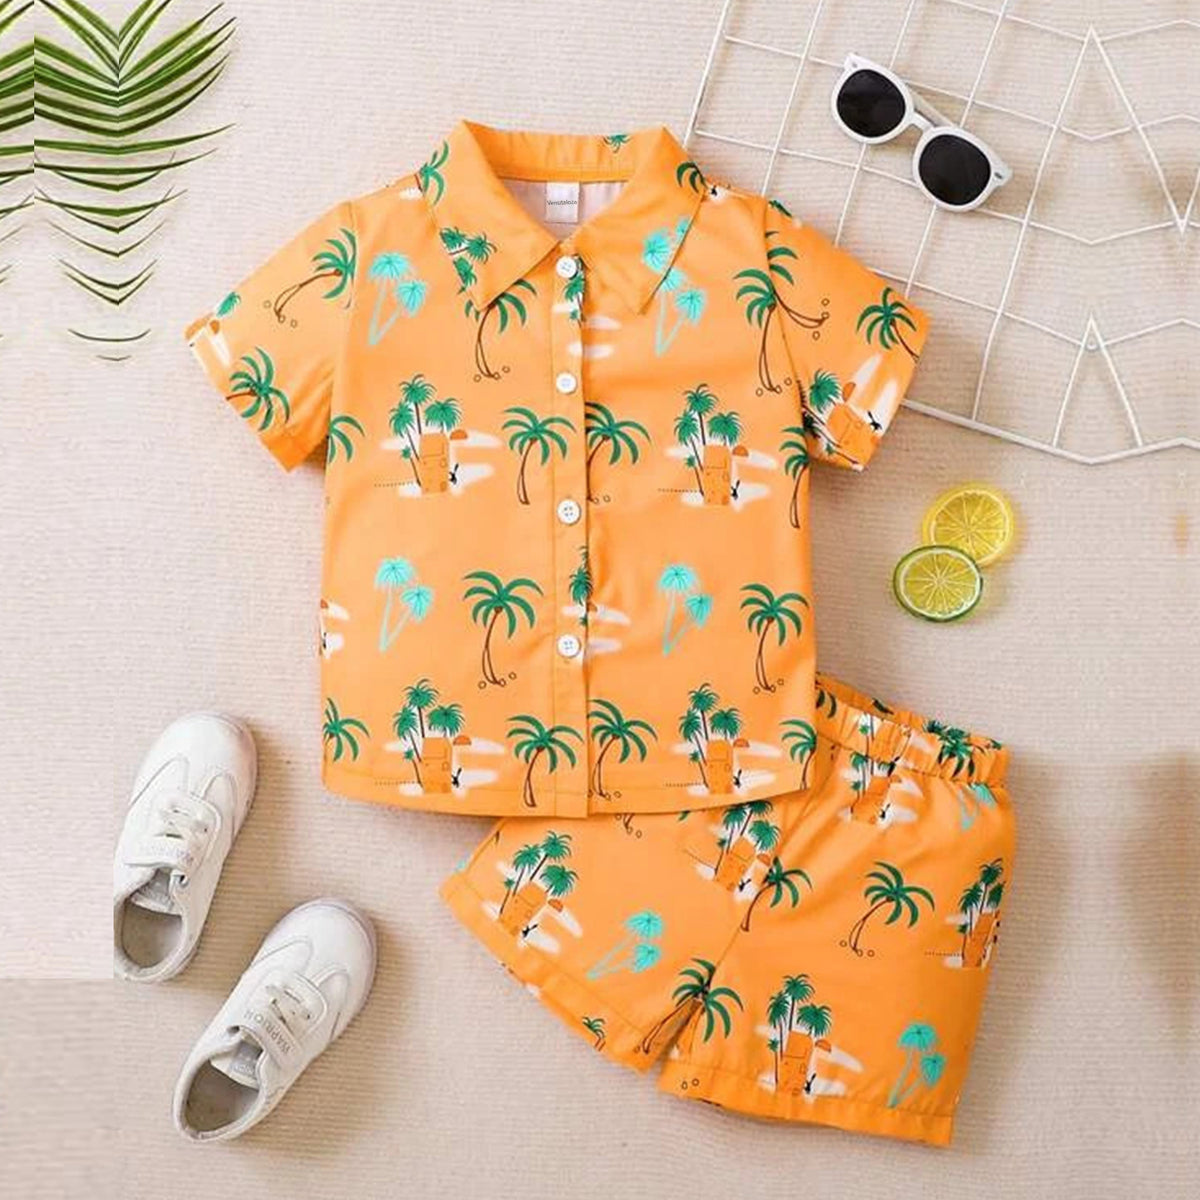 Venutaloza Kids Sunshine Coconut Tree Shirt & Shorts Without tee Two Piece Set.